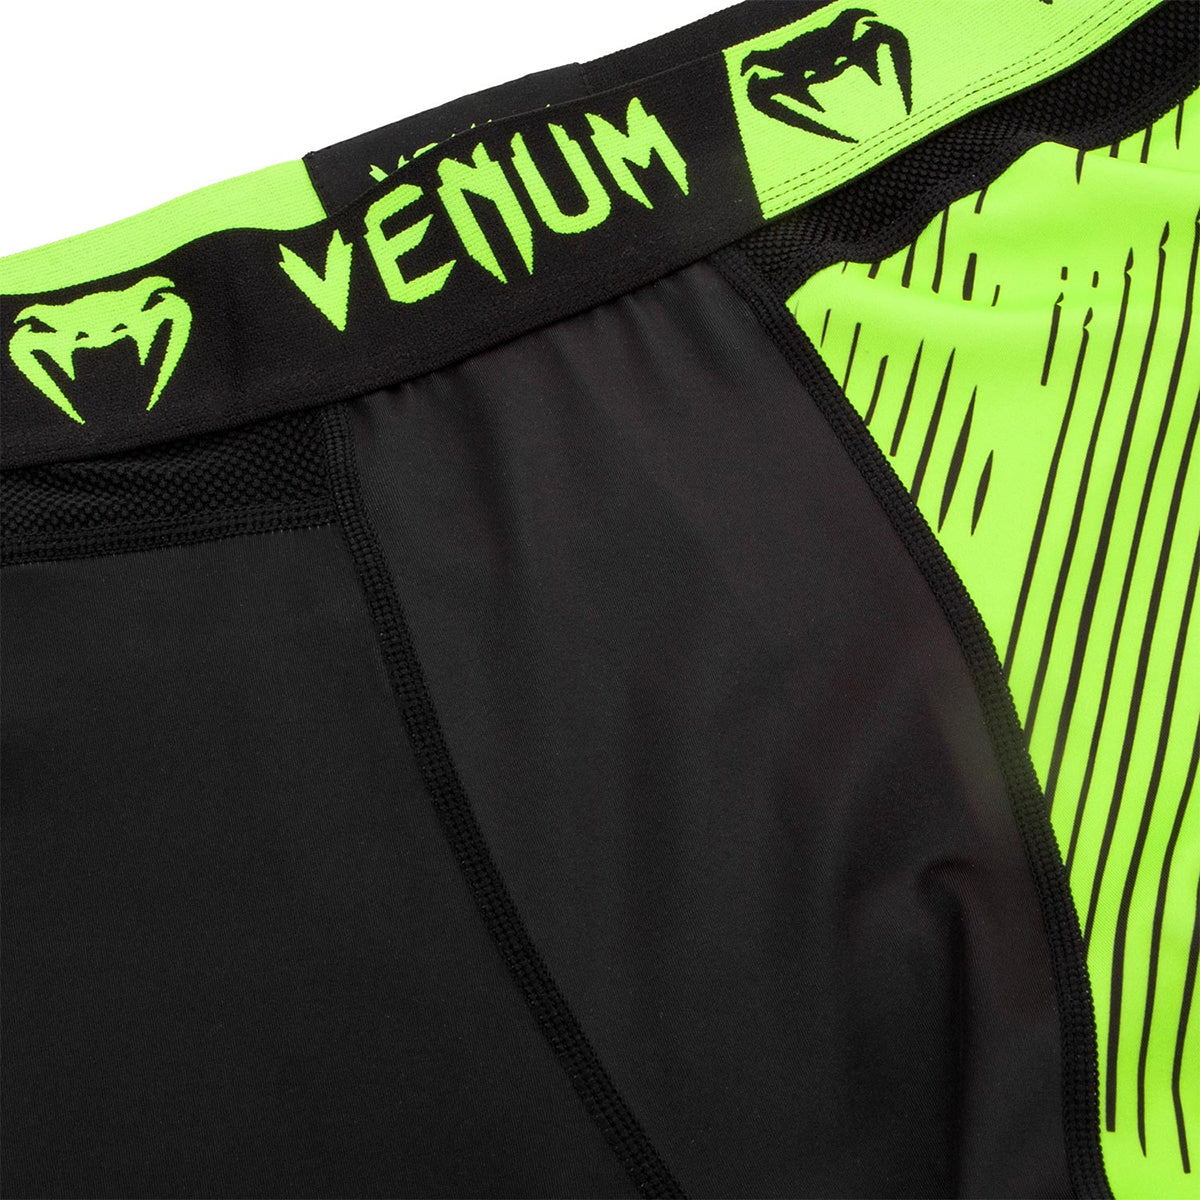 Venum Training Camp 2.0 Compression Spats - Black/Neon Yellow Venum